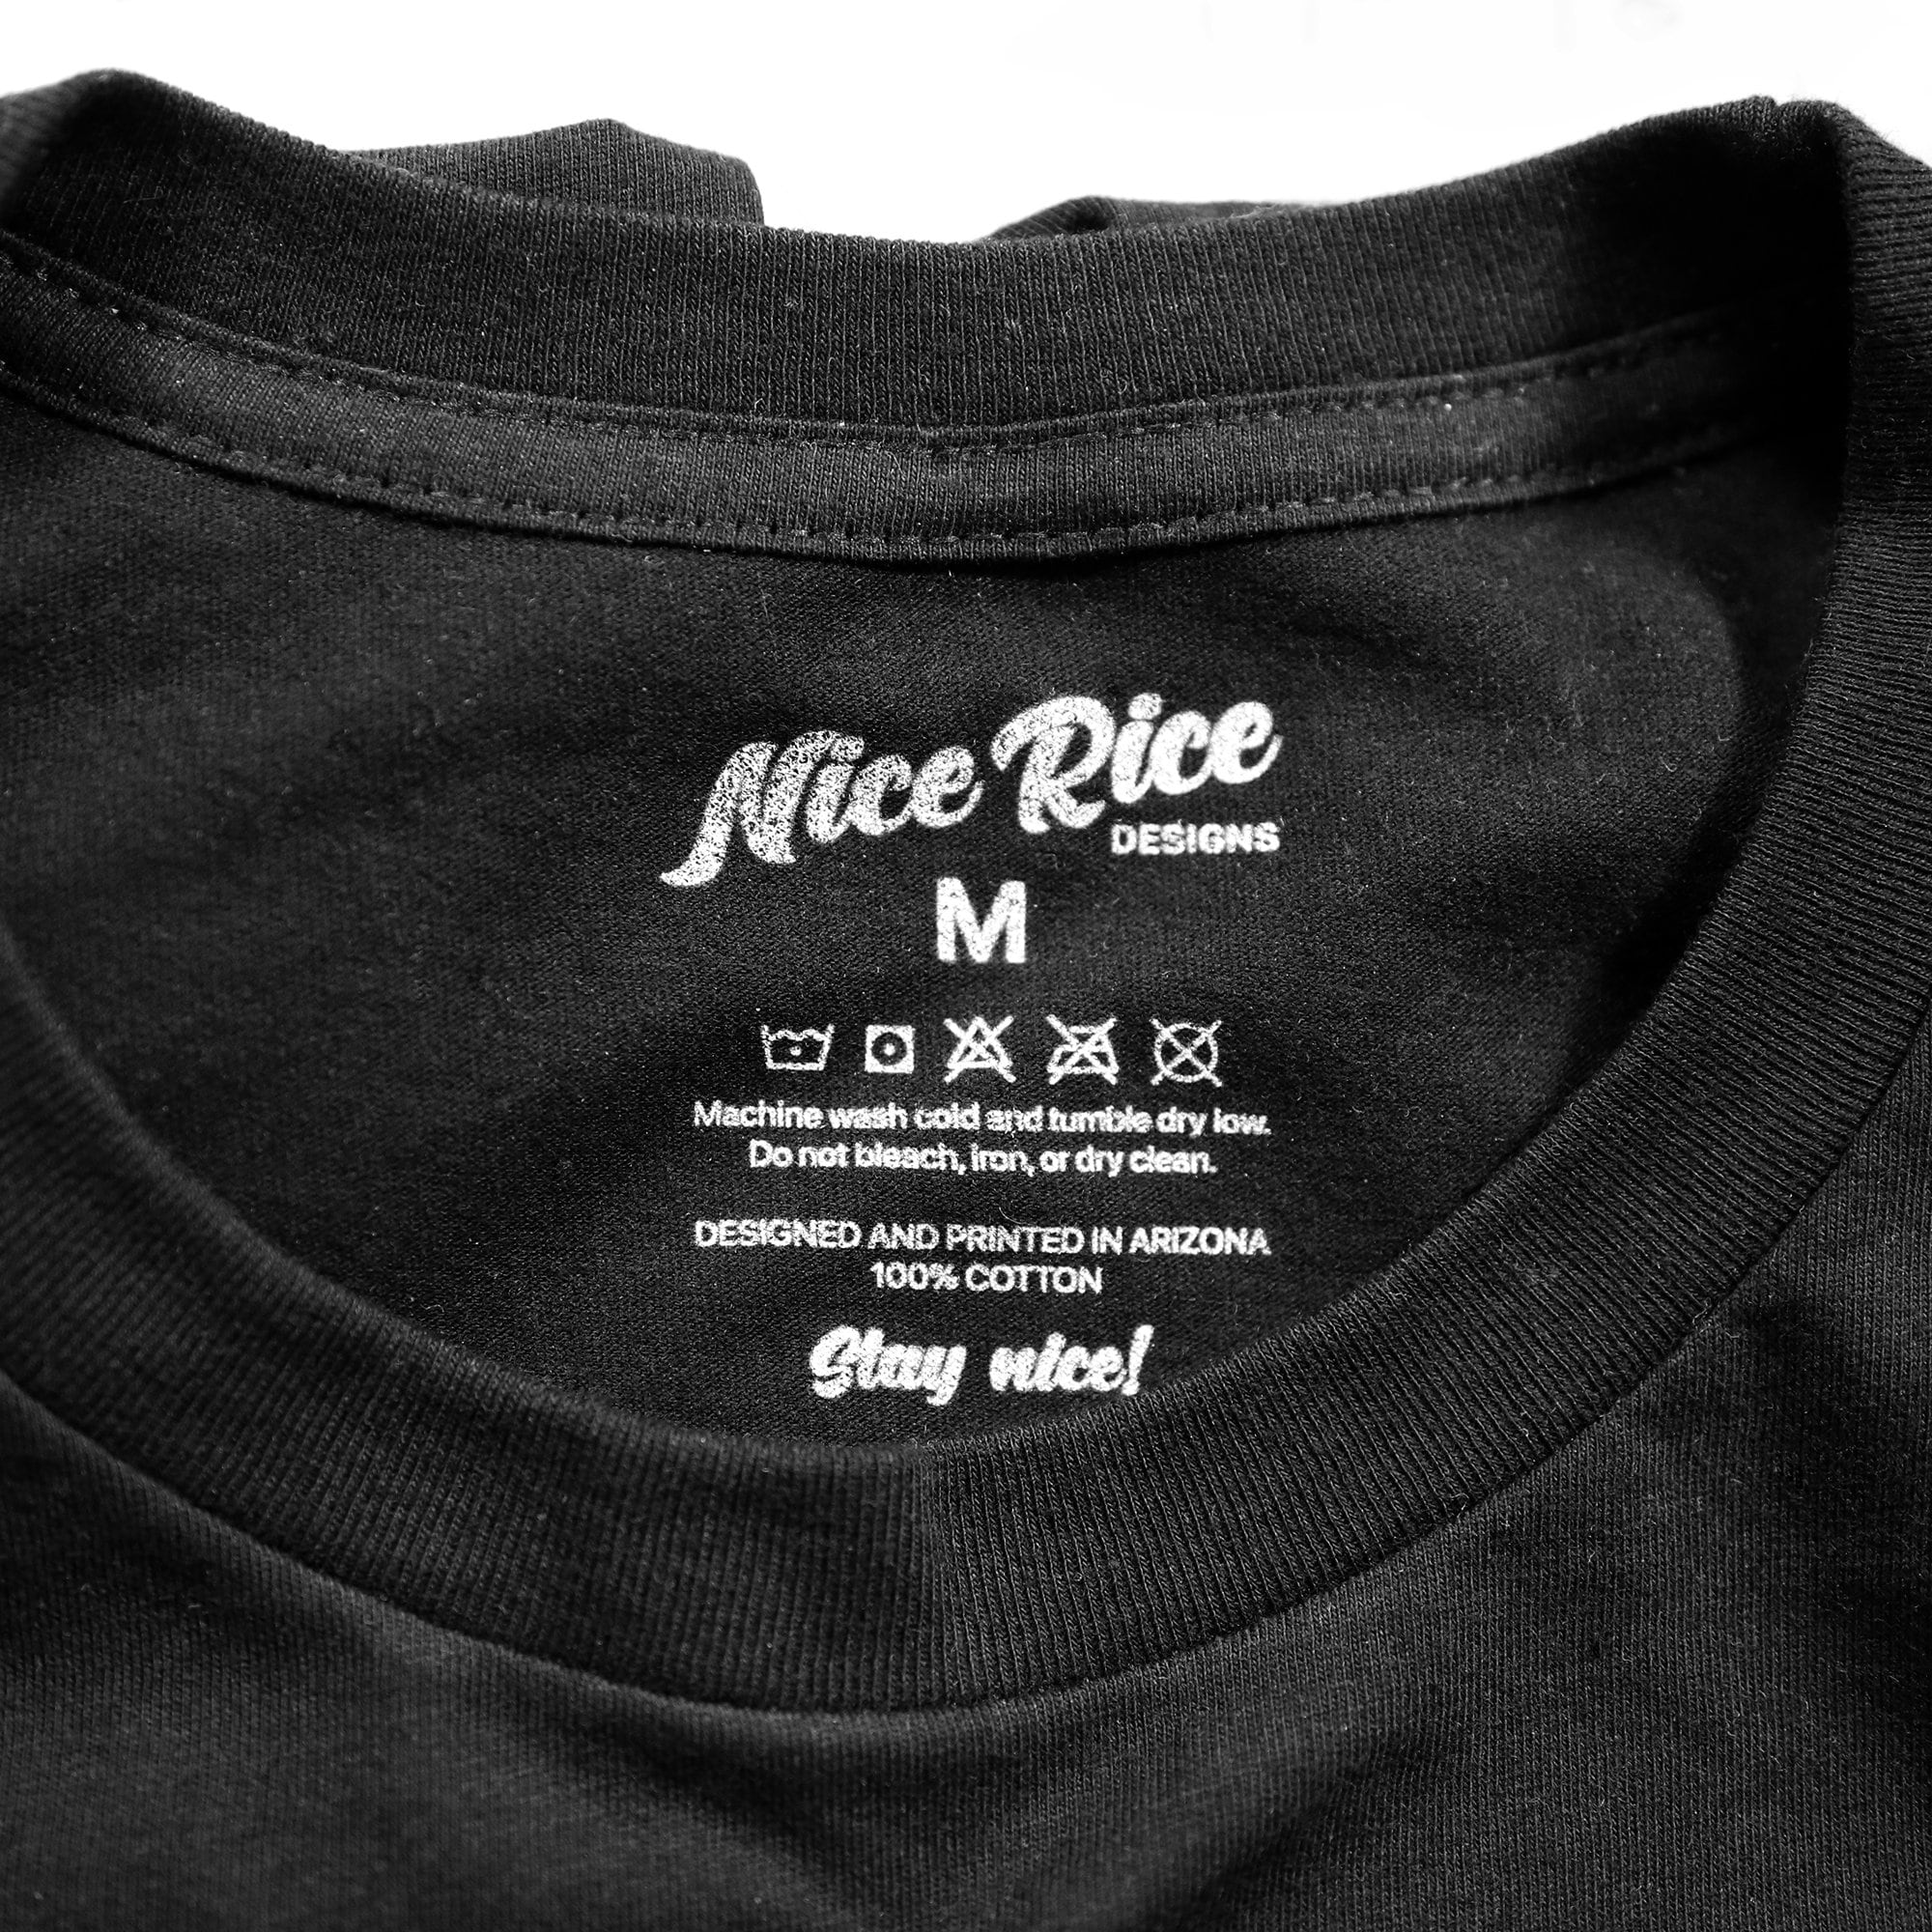 Jesk Shirt by Nice Rice Designs